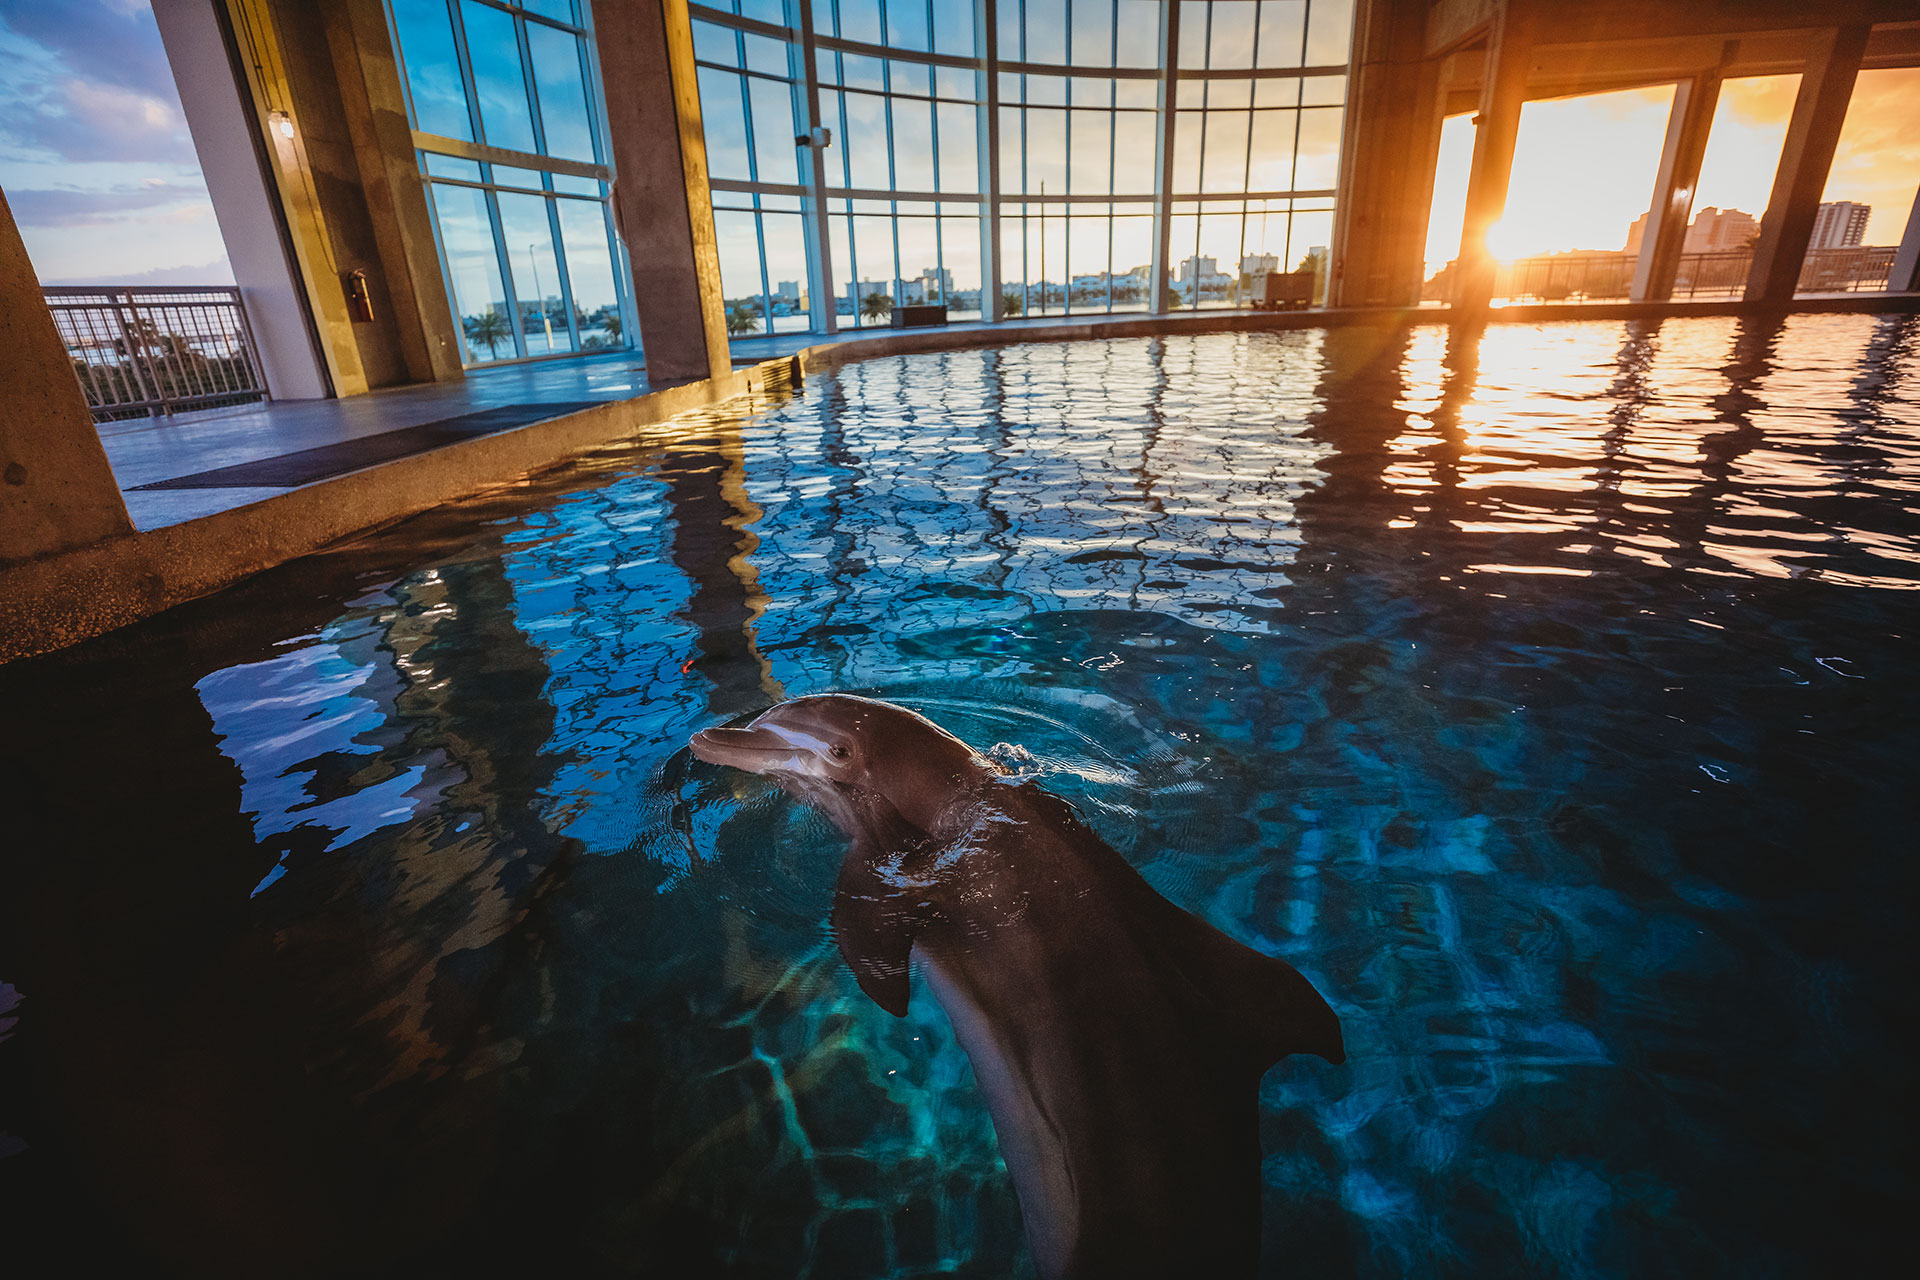 clearwater marine aquarium dolphins